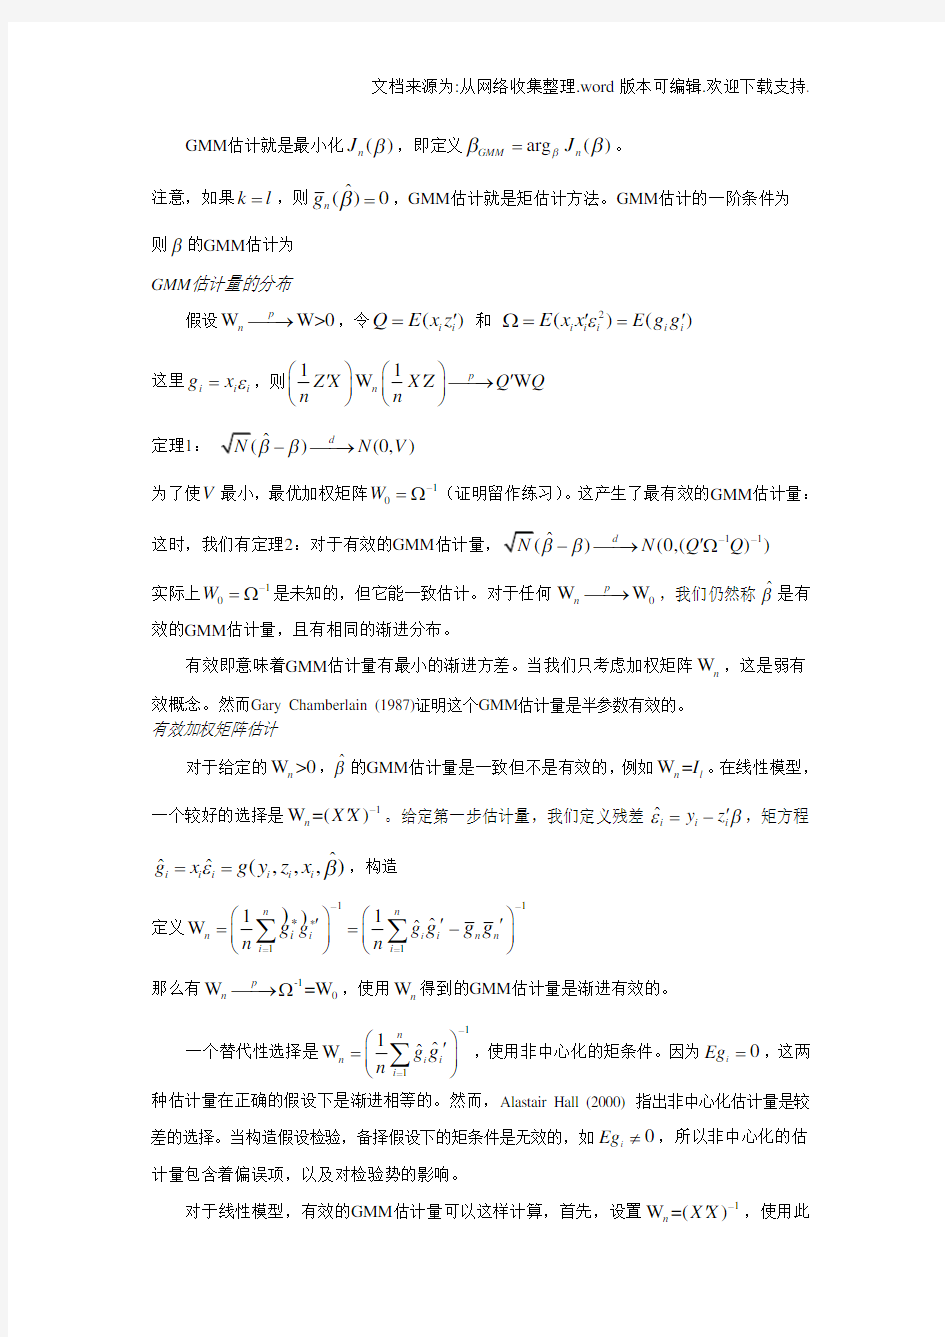 GMM估计中文讲义广义矩估计